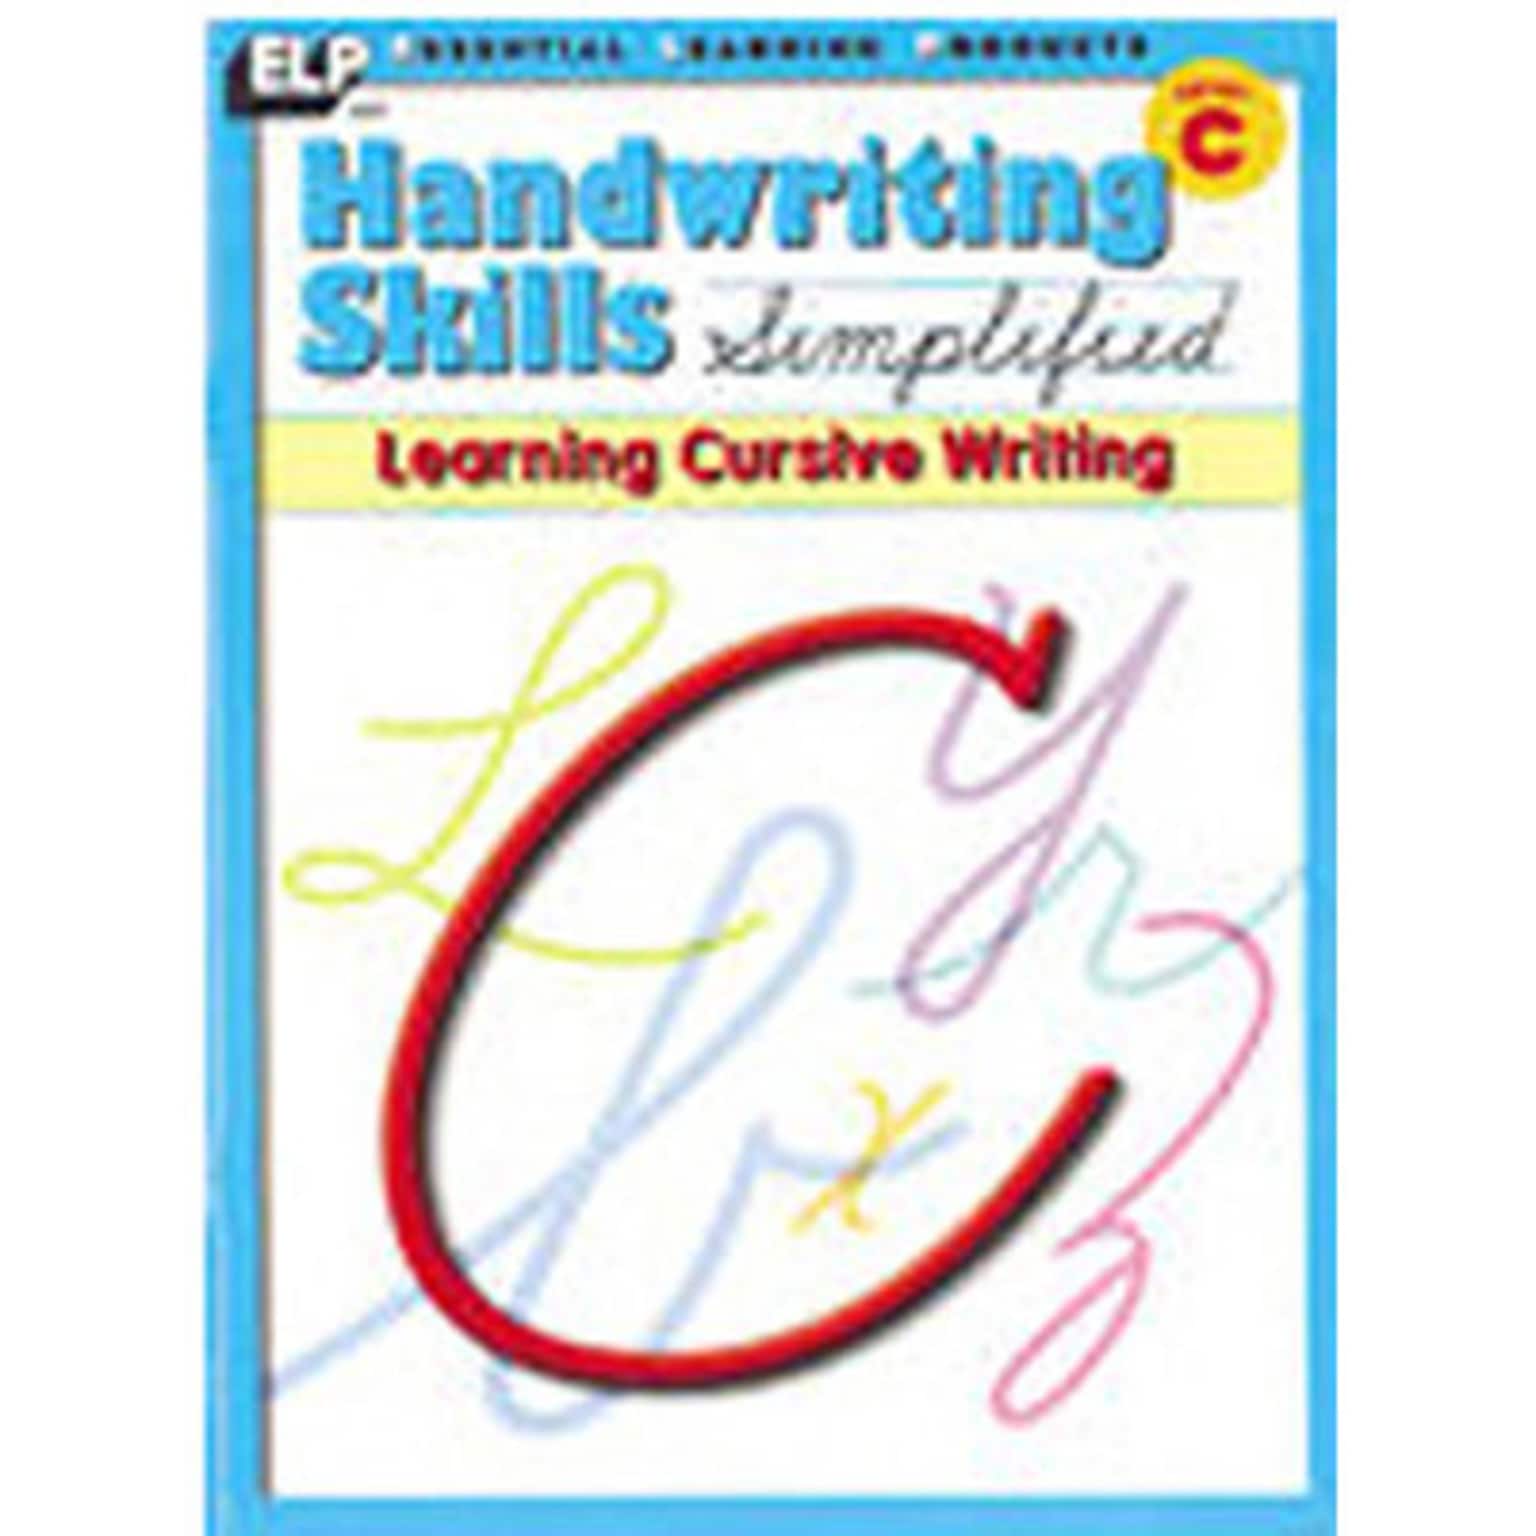 Handwriting Skills Simplified, Learning Cursive Writing Gr 3